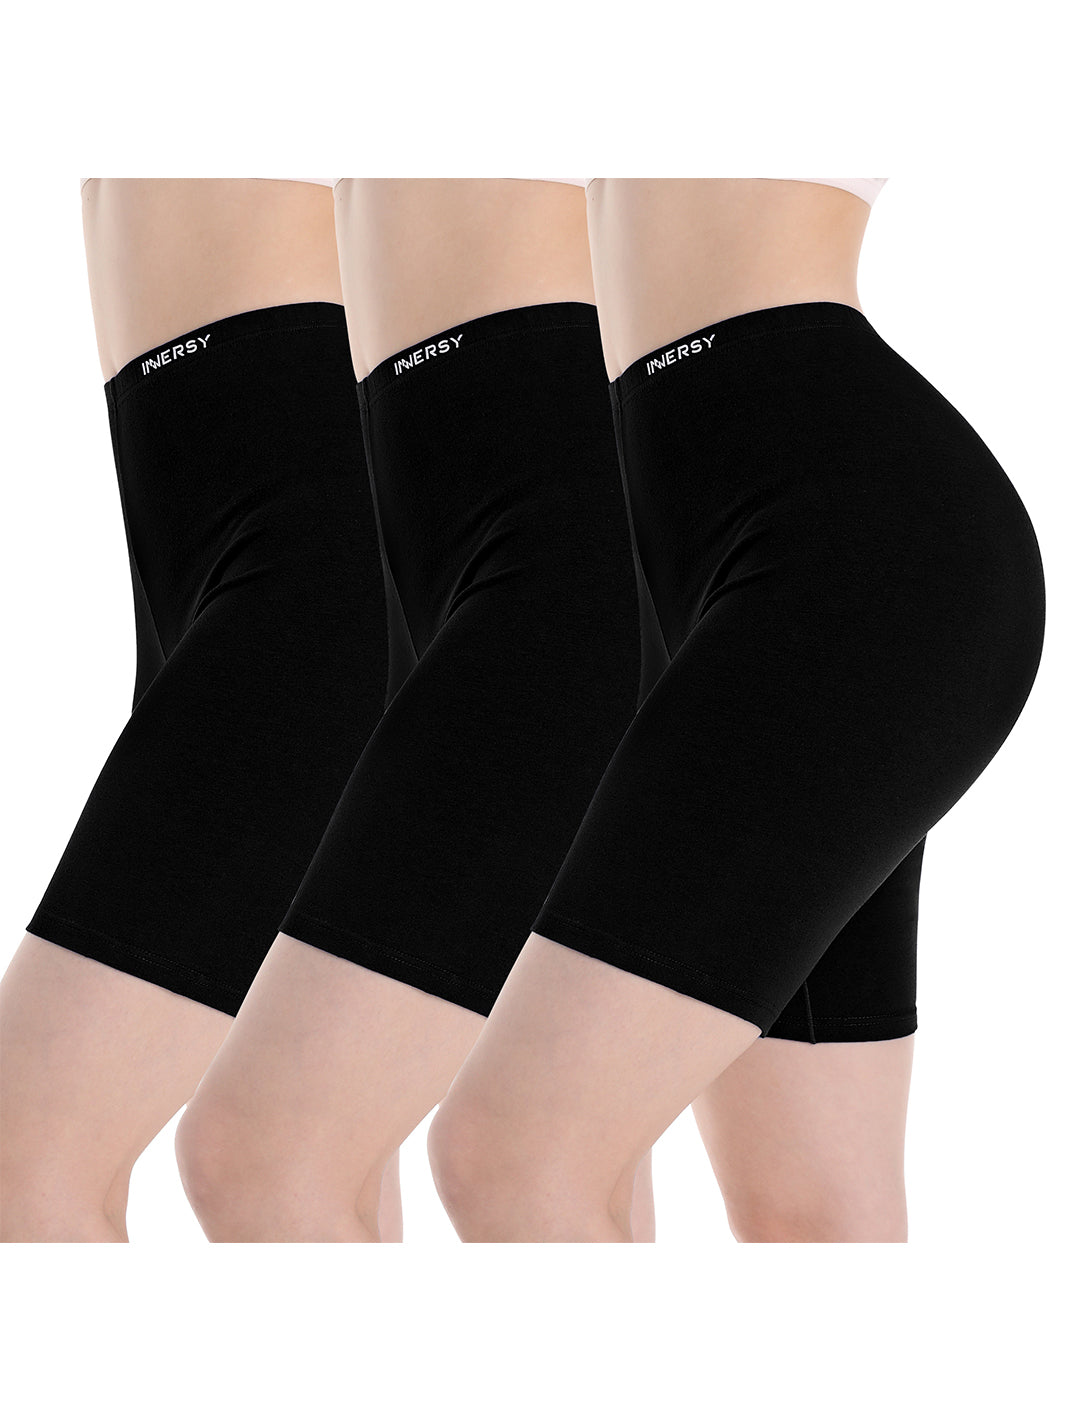 INNERSY Slip Shorts for Women High Waisted Under Dresses Summer Shorts 3  Pack (XL, Black/Nude/White) 